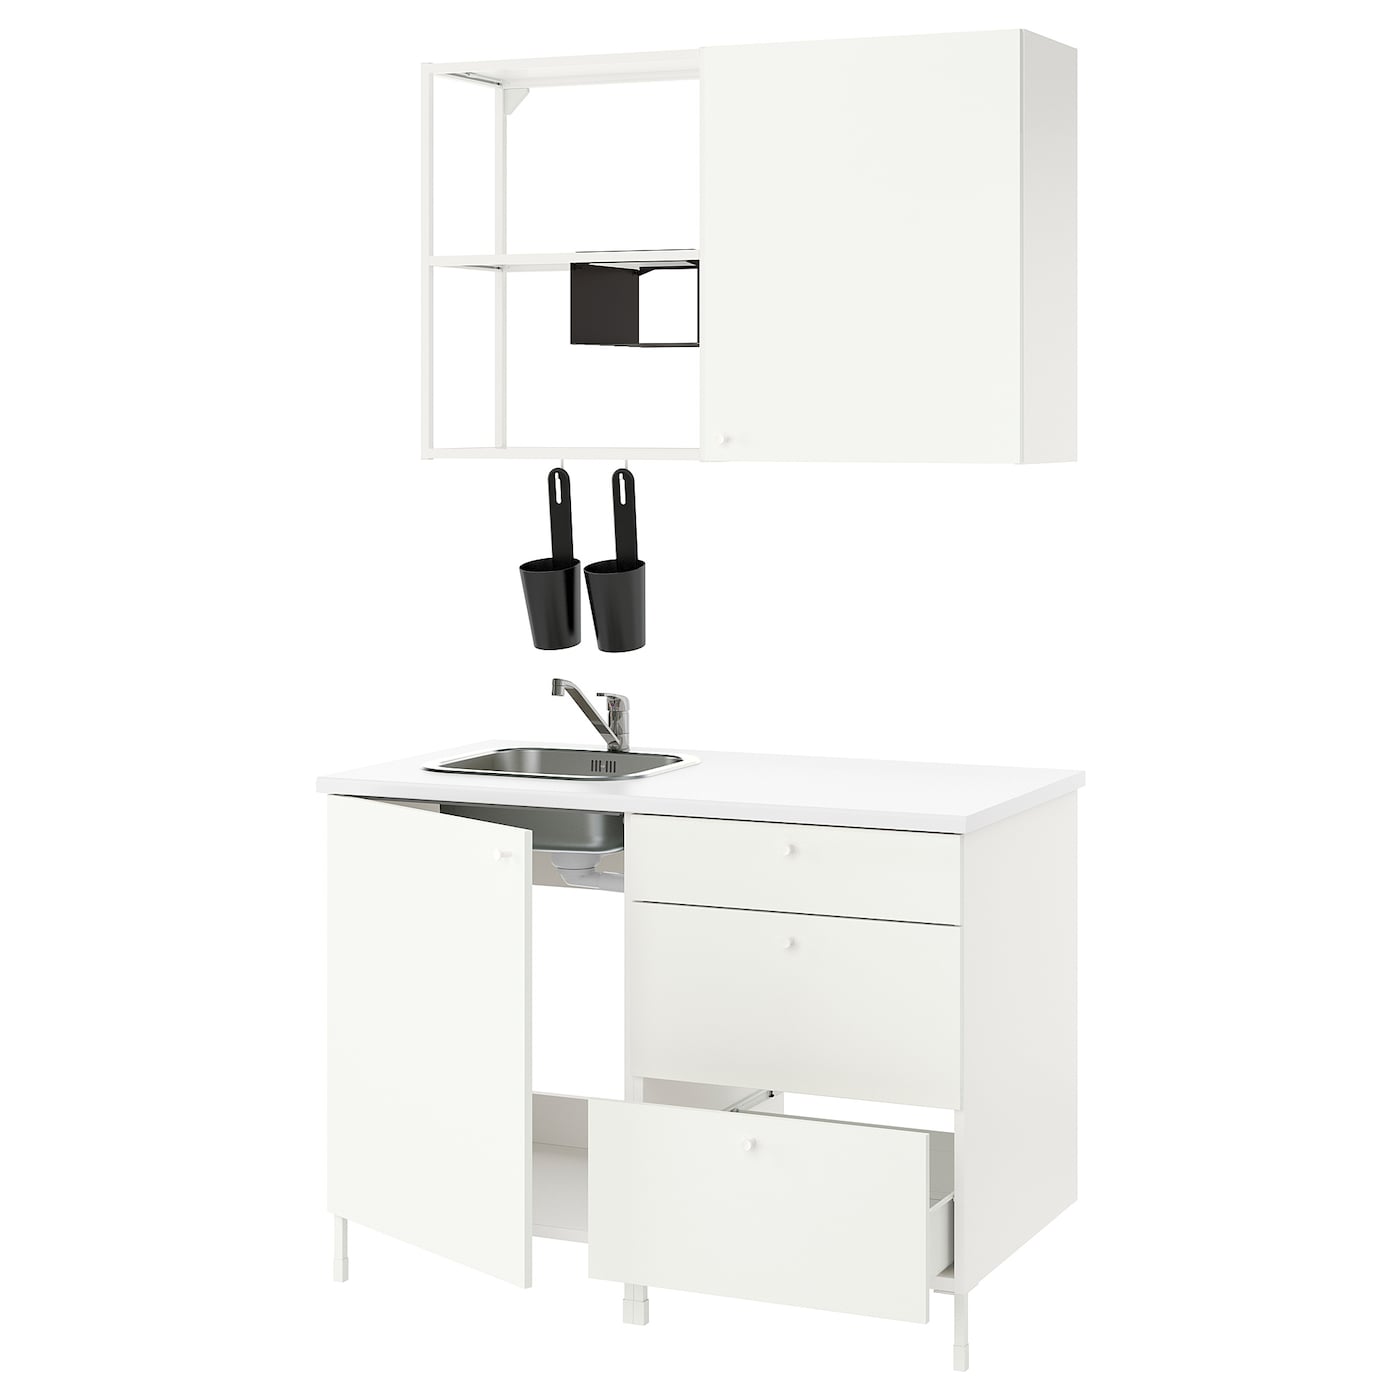 Кухонная комбинация для хранения - ENHET  IKEA/ ЭНХЕТ ИКЕА, 123х63,5х222 см, белый